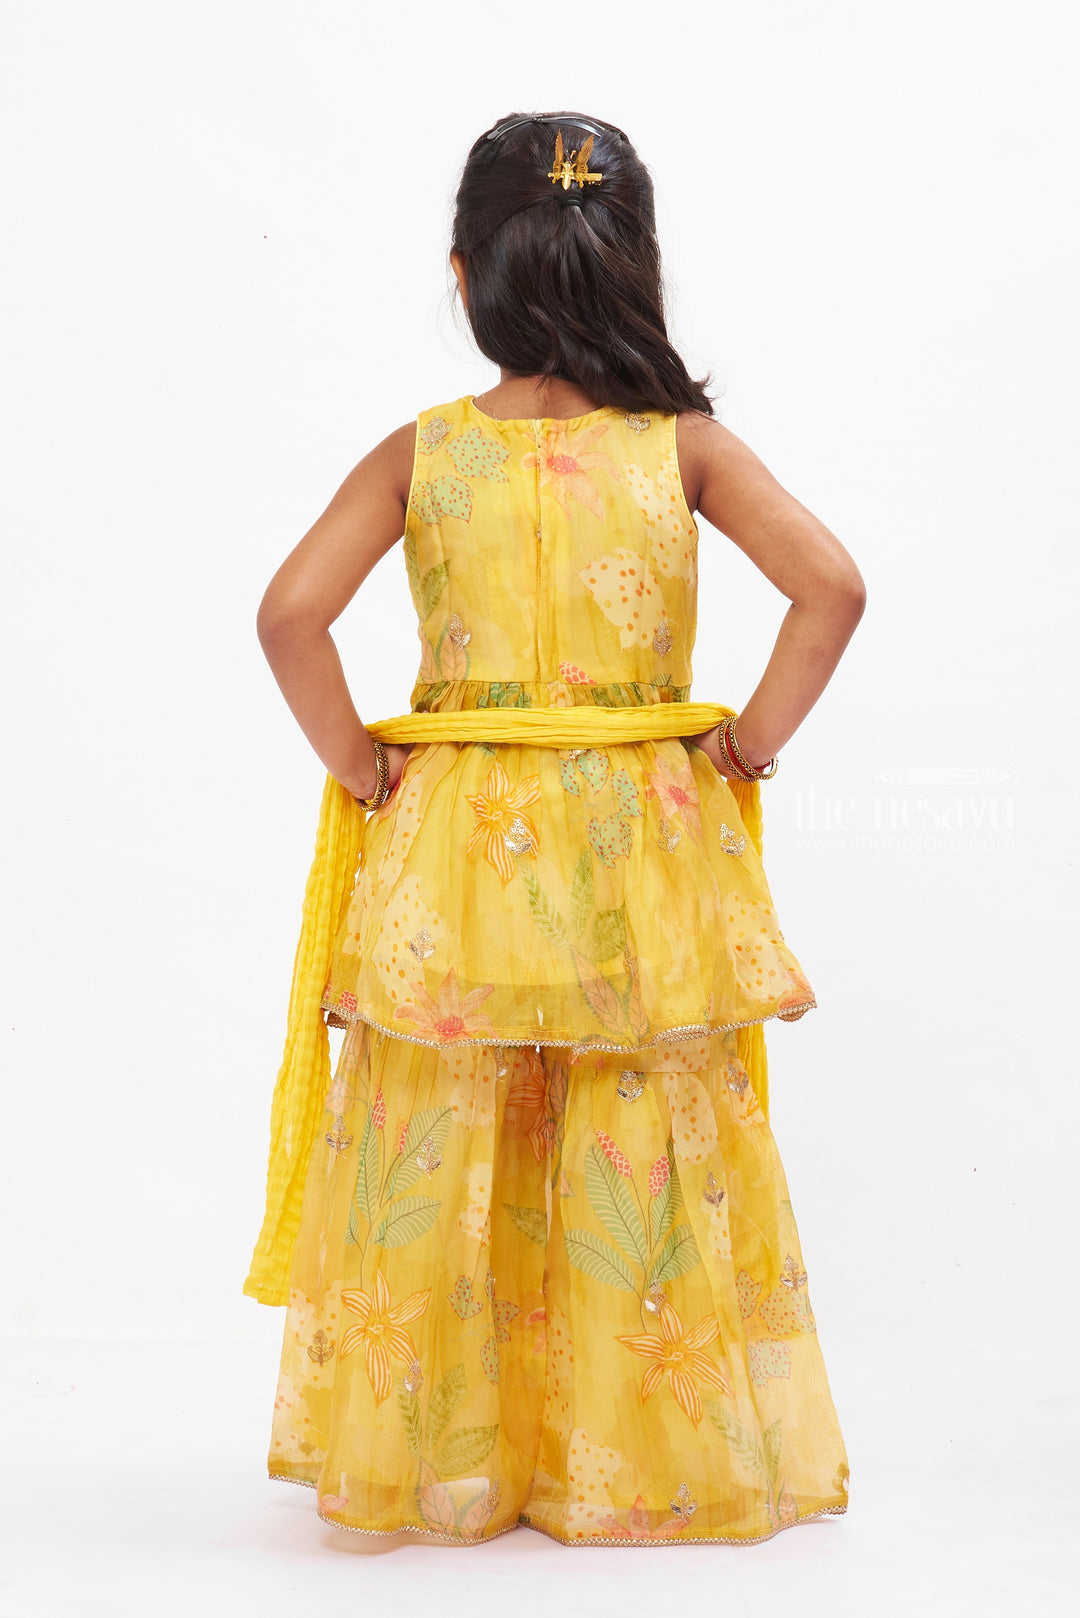 The Nesavu Girls Sharara / Plazo Set Sunshine Yellow Layered Gharara Set with Sparkling Sequins for Girls Nesavu Buy Girls Yellow Sequined Gharara Set | Vibrant Floral Themed Outfit | The Nesavu